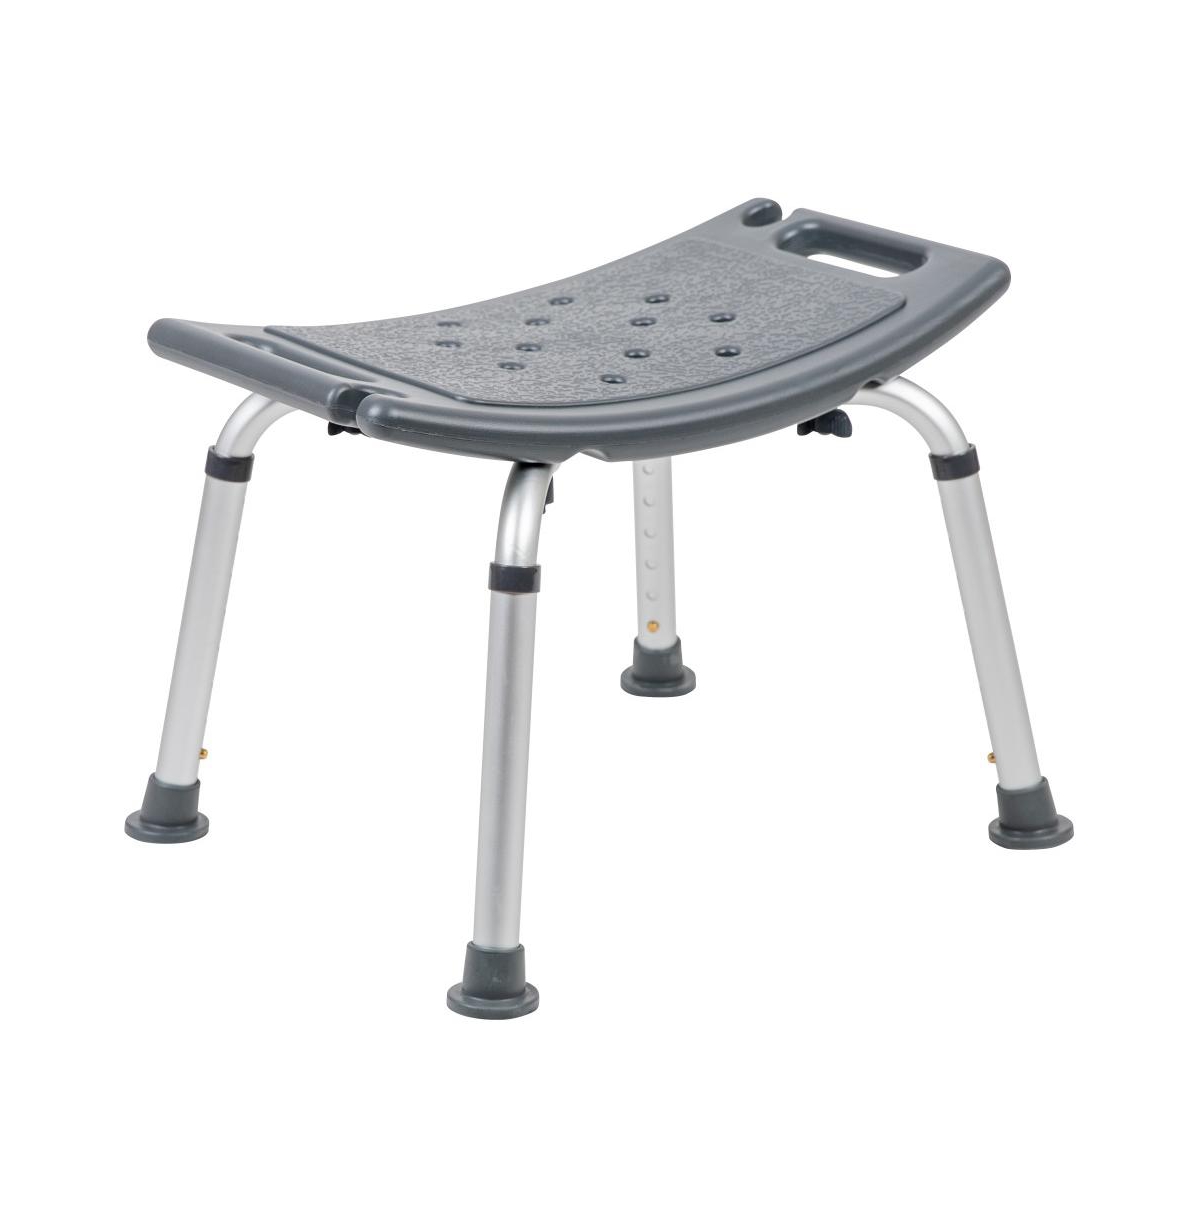 Tool-Free 300 Lb. Capacity, Adjustable Bath & Shower Chair W/ Non-Slip Feet - Gray